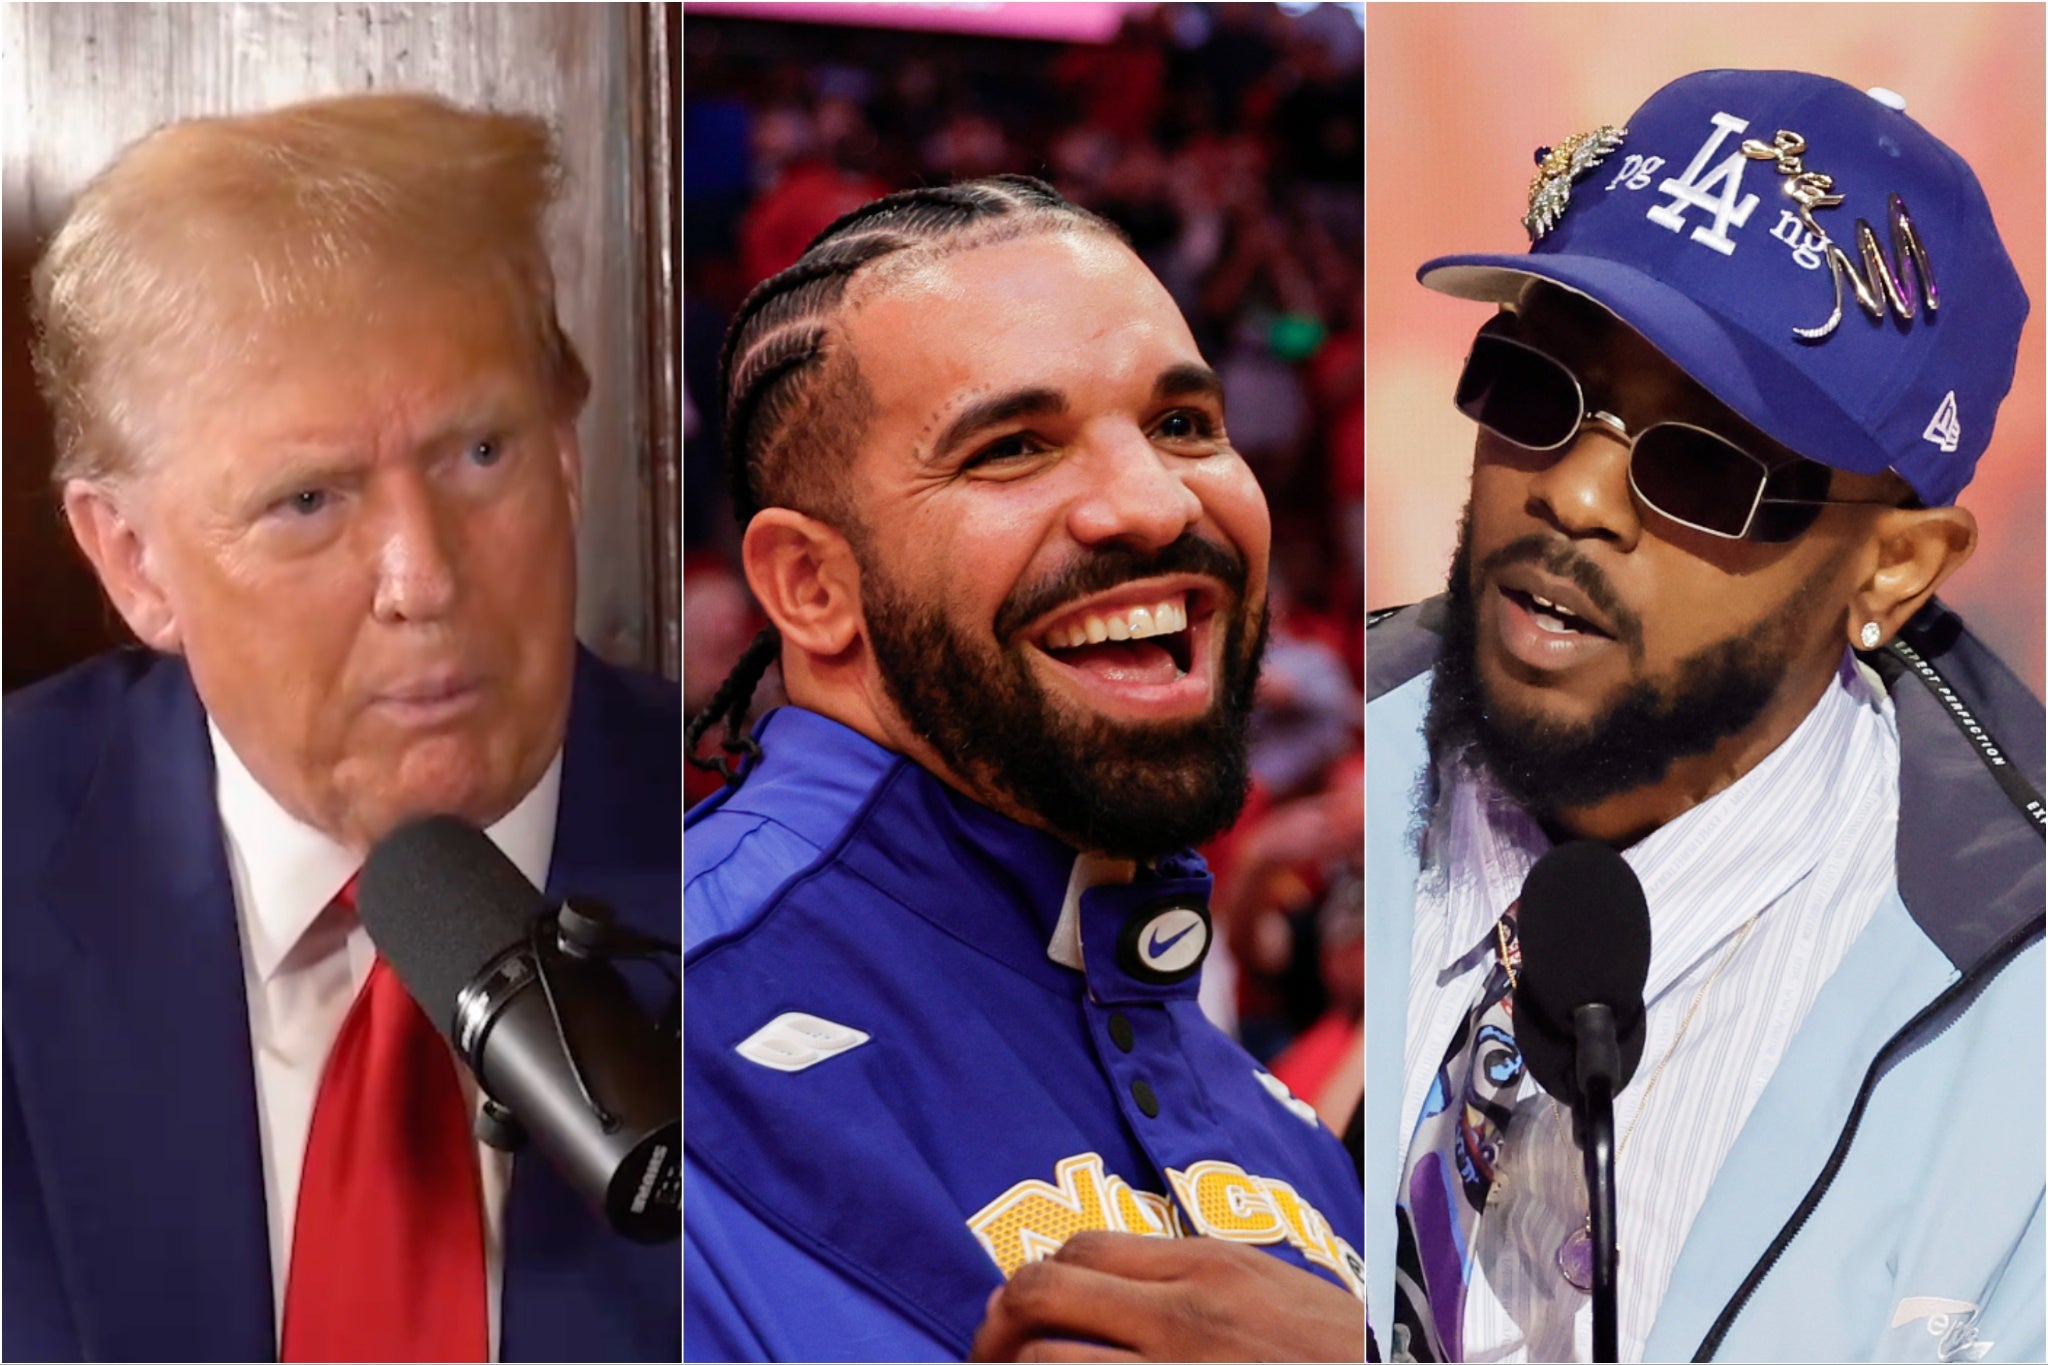 From left: Donald Trump, Drake and Kendrick Lamar